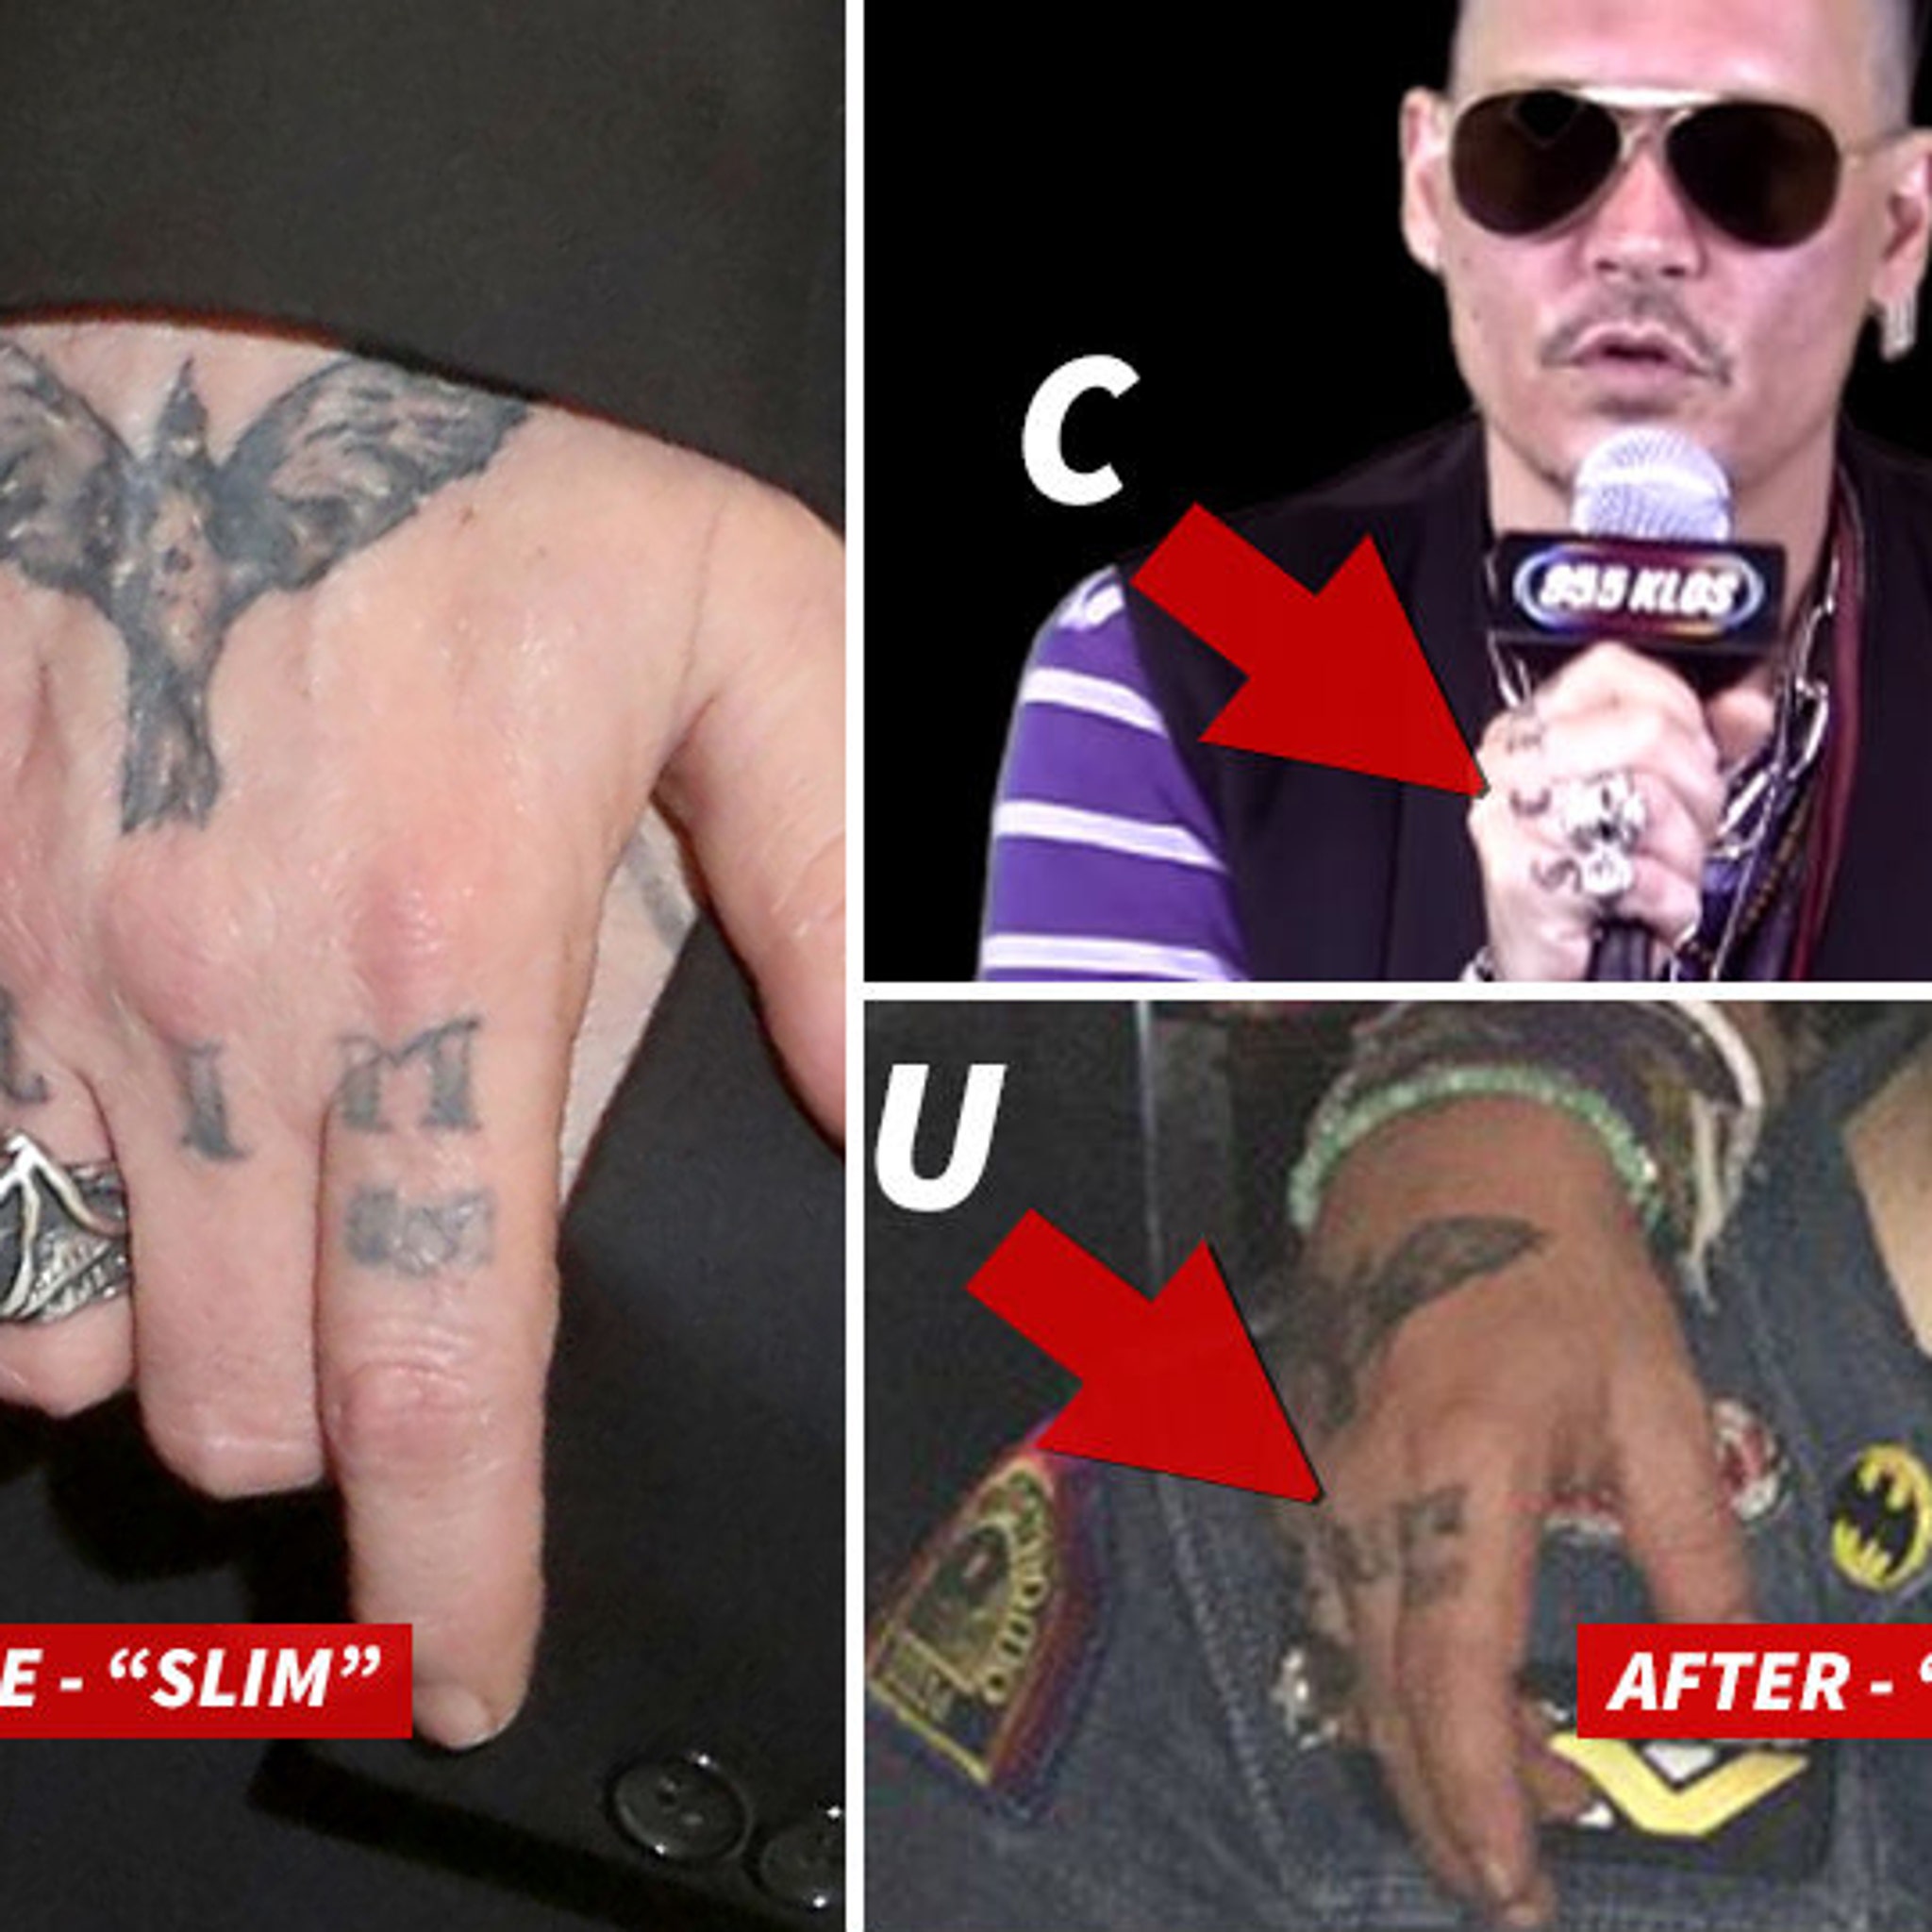 Johnny Depp Changes Amber Heard Tattoo to 'Scum': Photo 3697108 | Amber  Heard, Johnny Depp Photos | Just Jared: Entertainment News